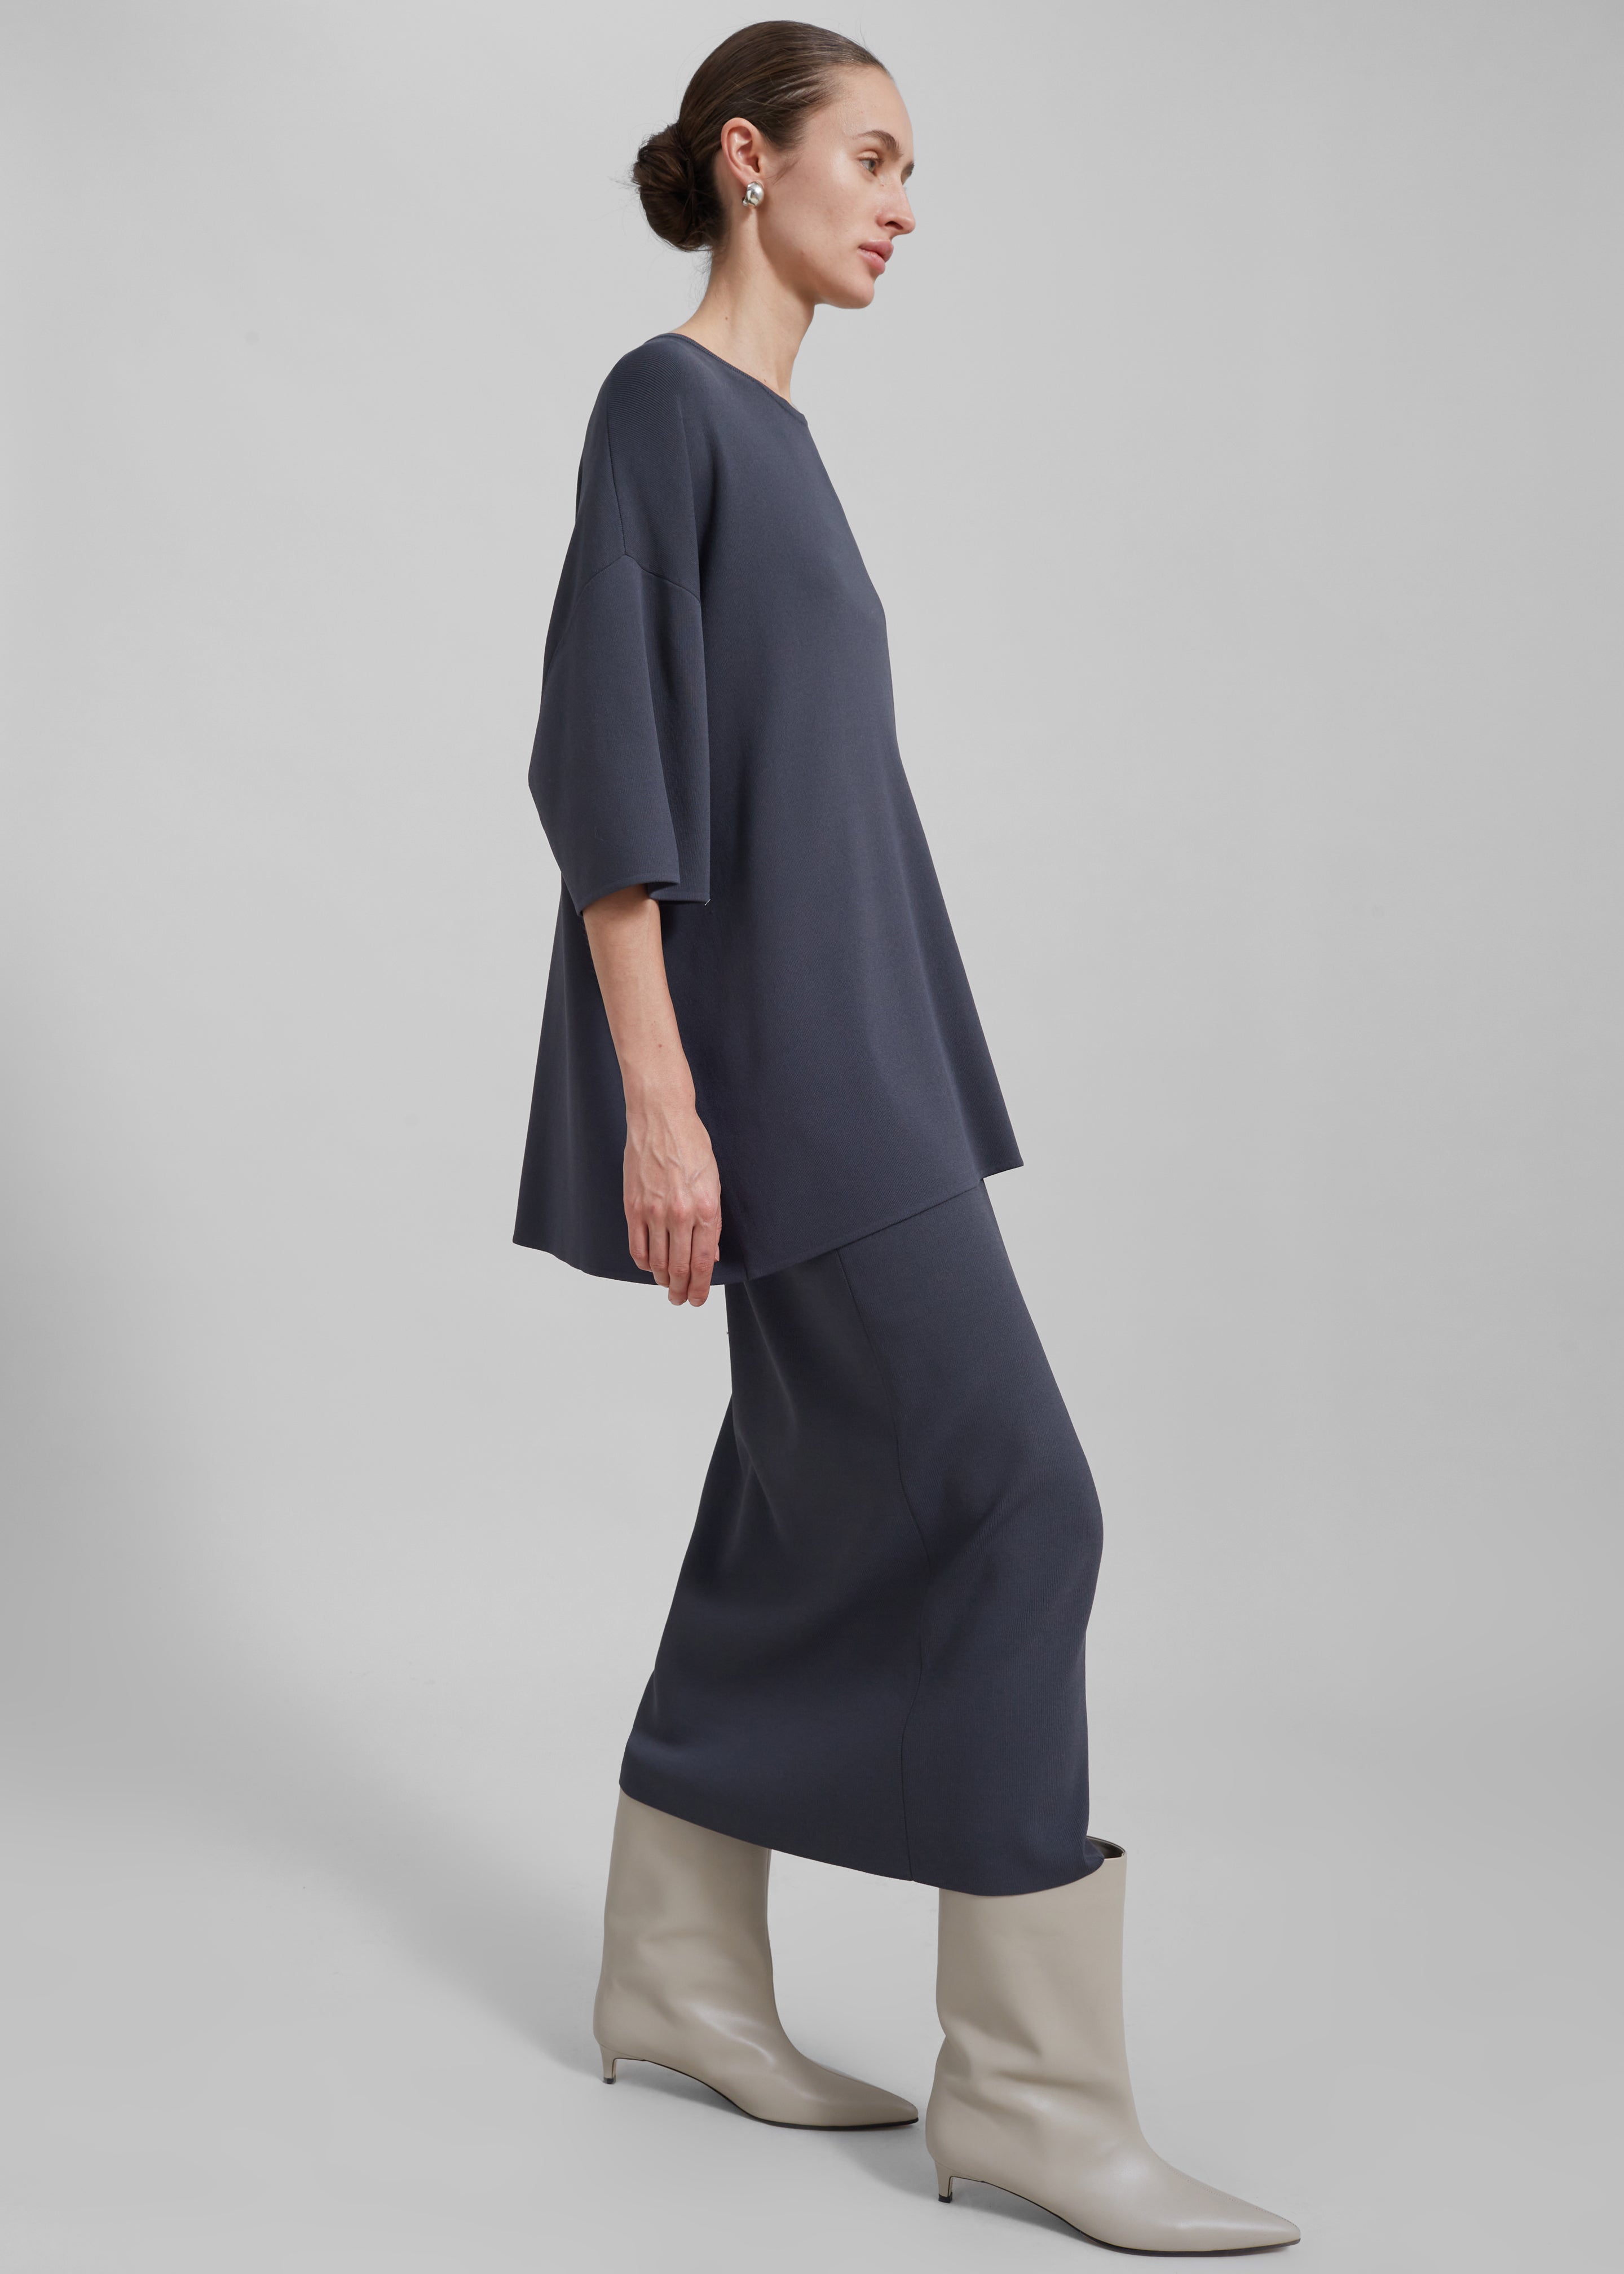 Solange Knit Pencil Skirt - Grey - 7